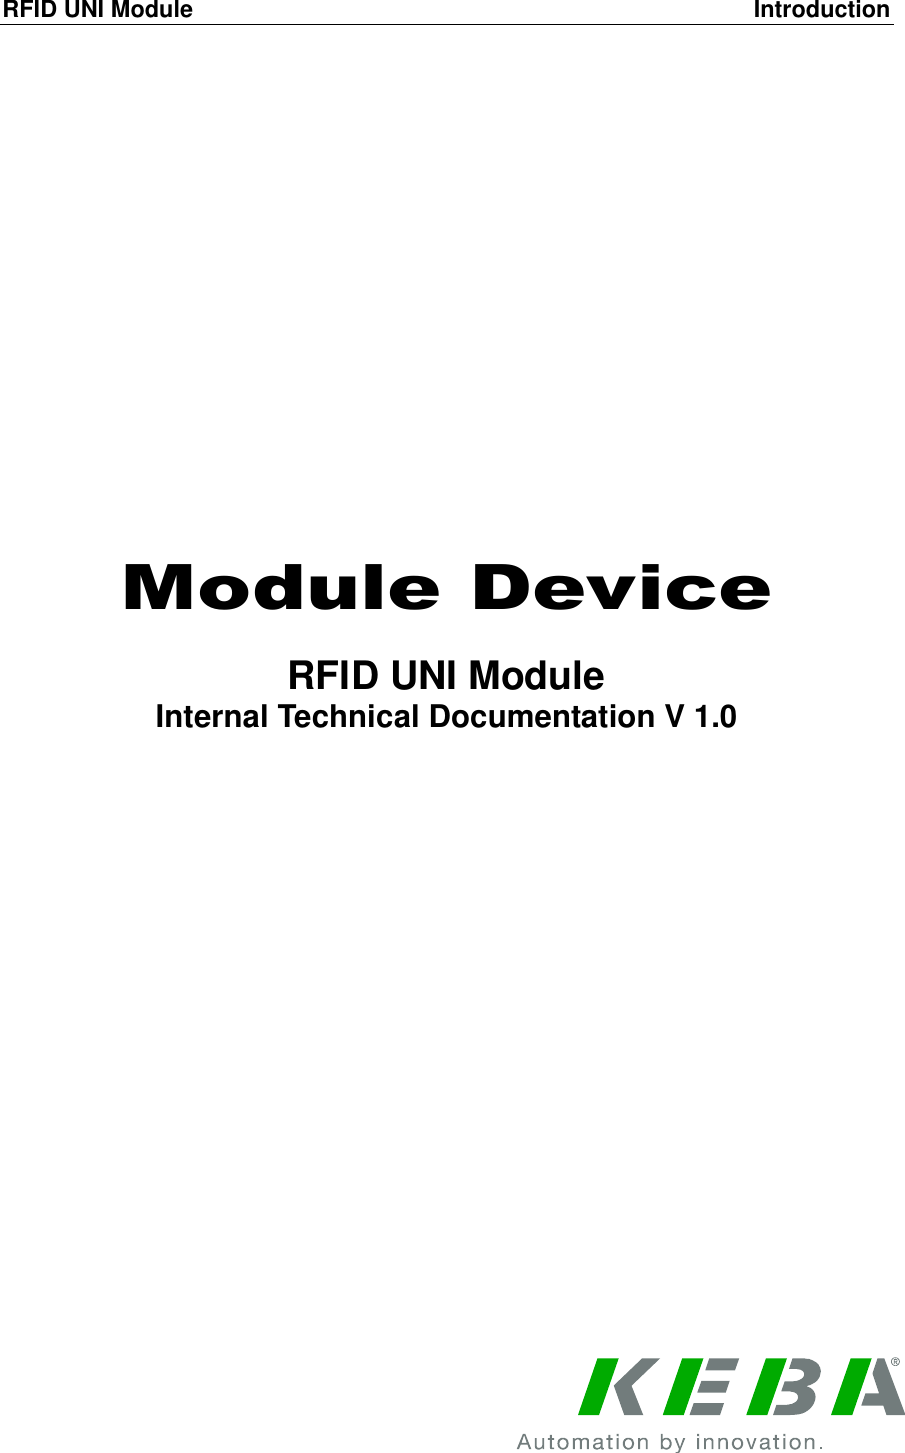 RFID UNI Module  Introduction                  Module Device  RFID UNI Module Internal Technical Documentation V 1.0     